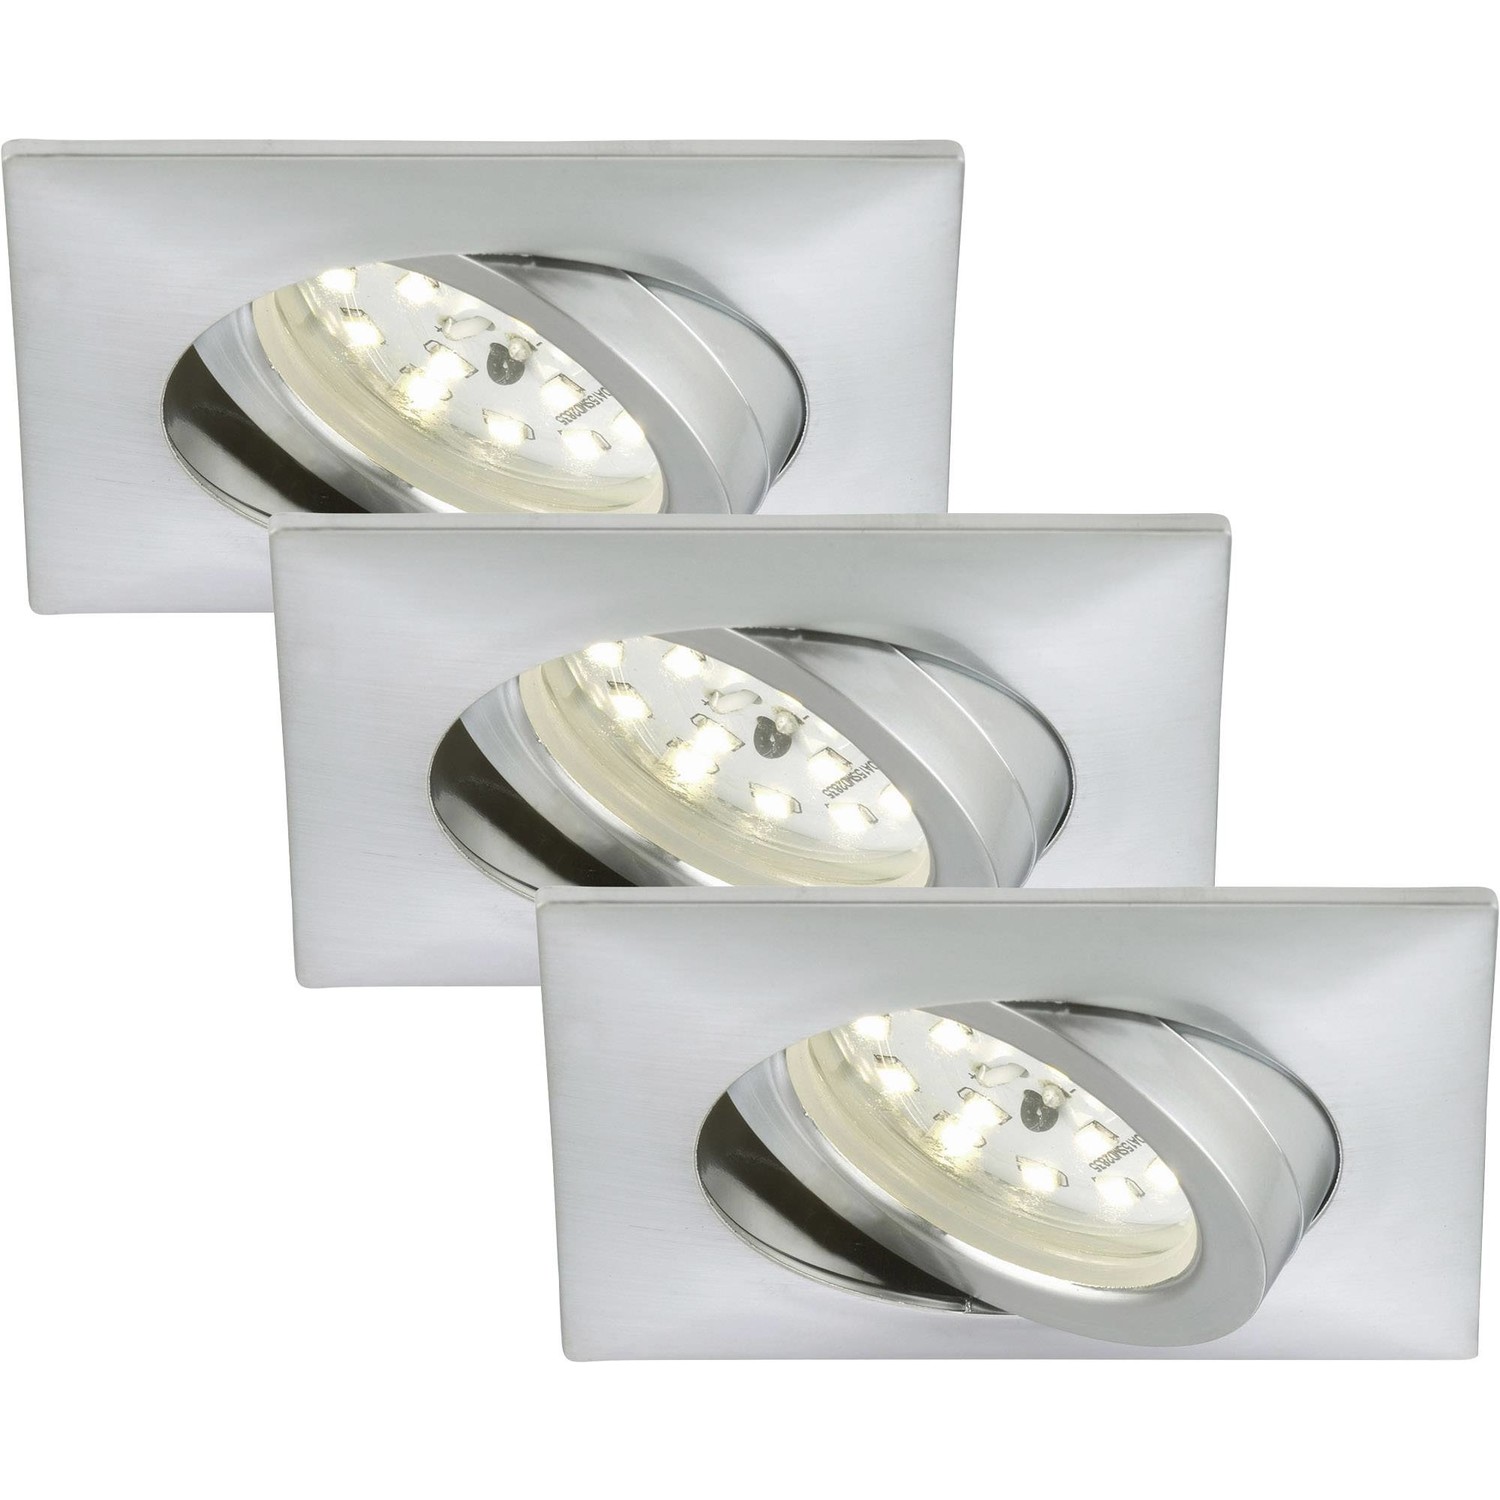 kassa bevestig alstublieft vervormen Briloner 7210-039 LED-inbouwlamp Set van 3 x 5 W LED Warm-wit Aluminium -  willemxl.com